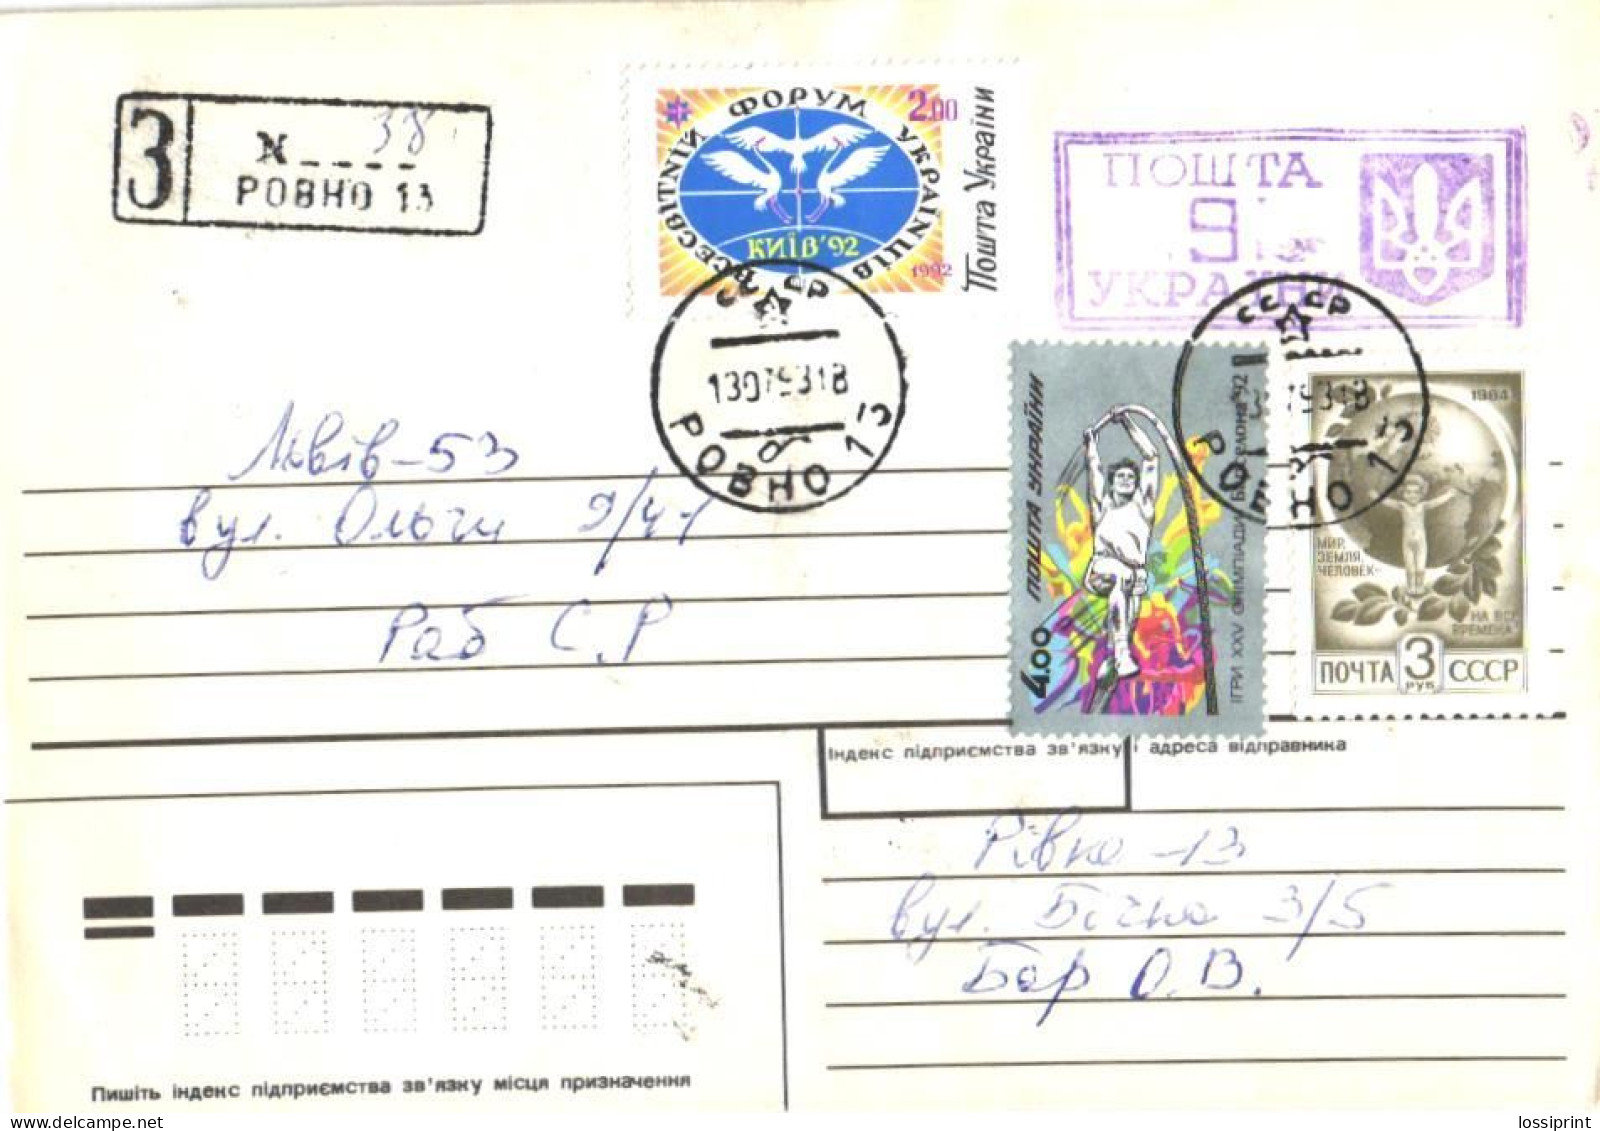 Ukraine:Ukraina:Registered Letter From Rovno13 With Soviet Unioln And Ukraine Stamps And Cancellation, 1993 - Ukraine